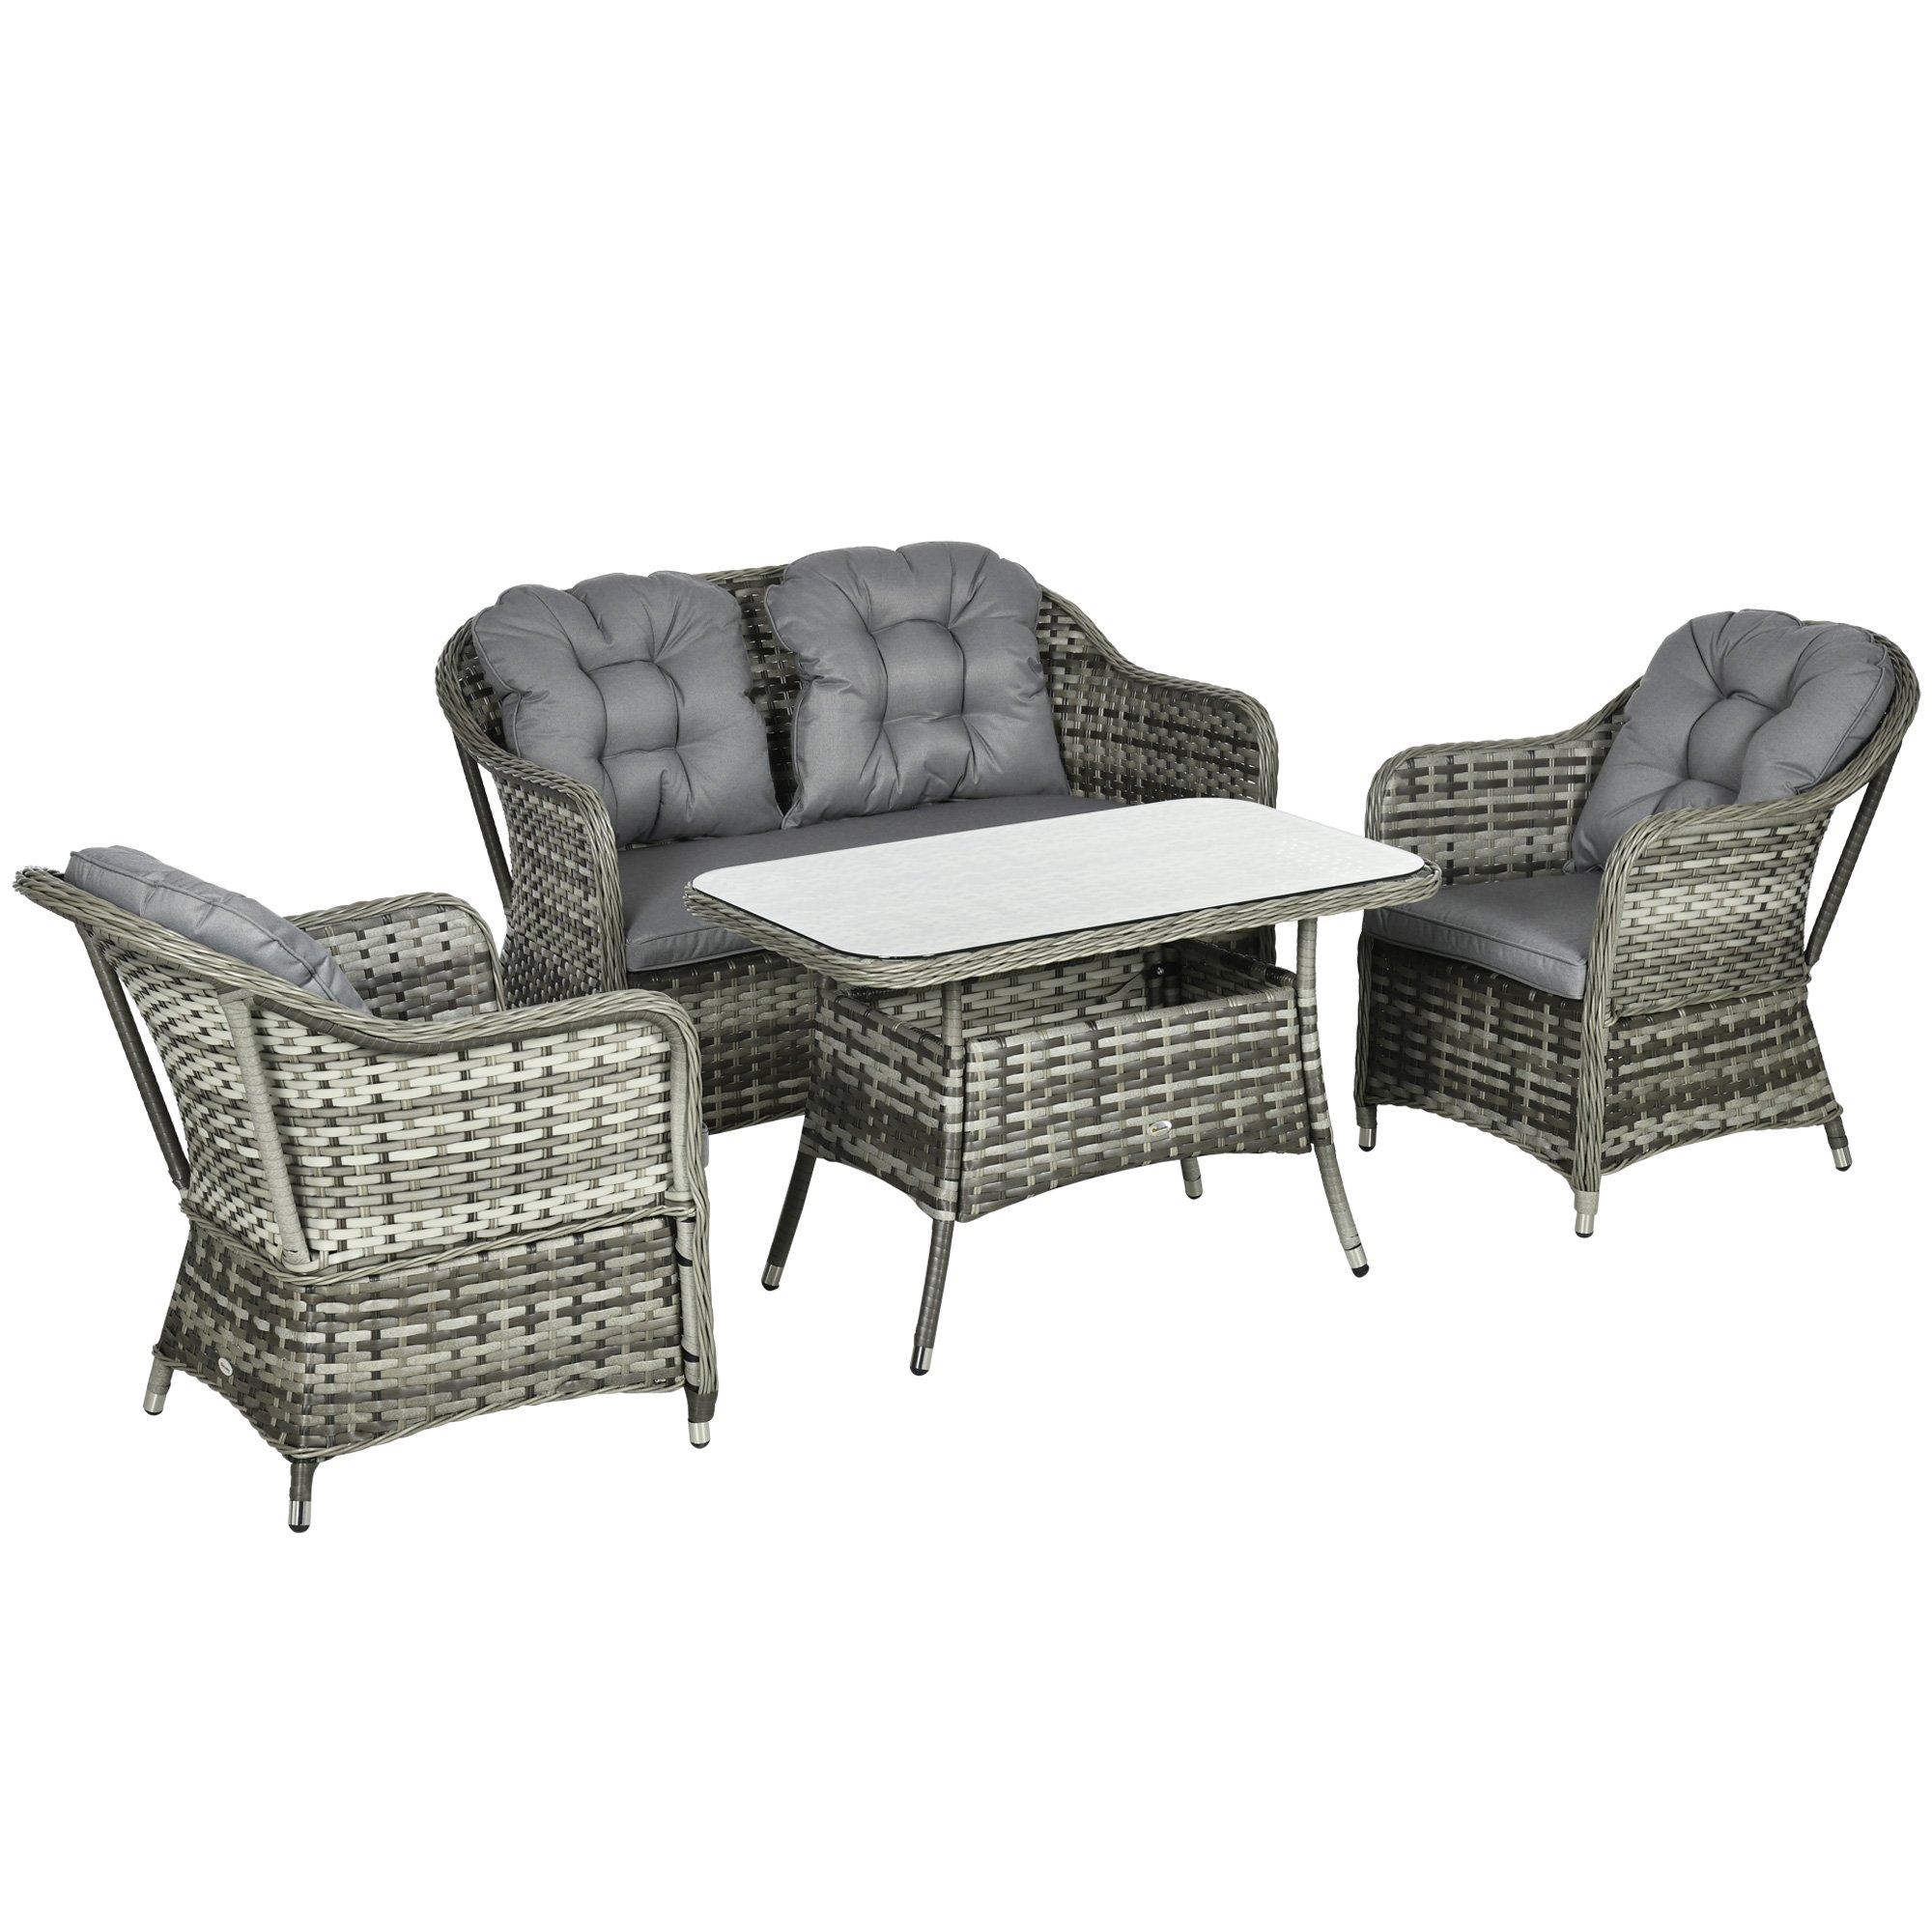 4 PCS Rattan Garden Furniture, Padded Conversation Sofa Set w/ Glass Top Table